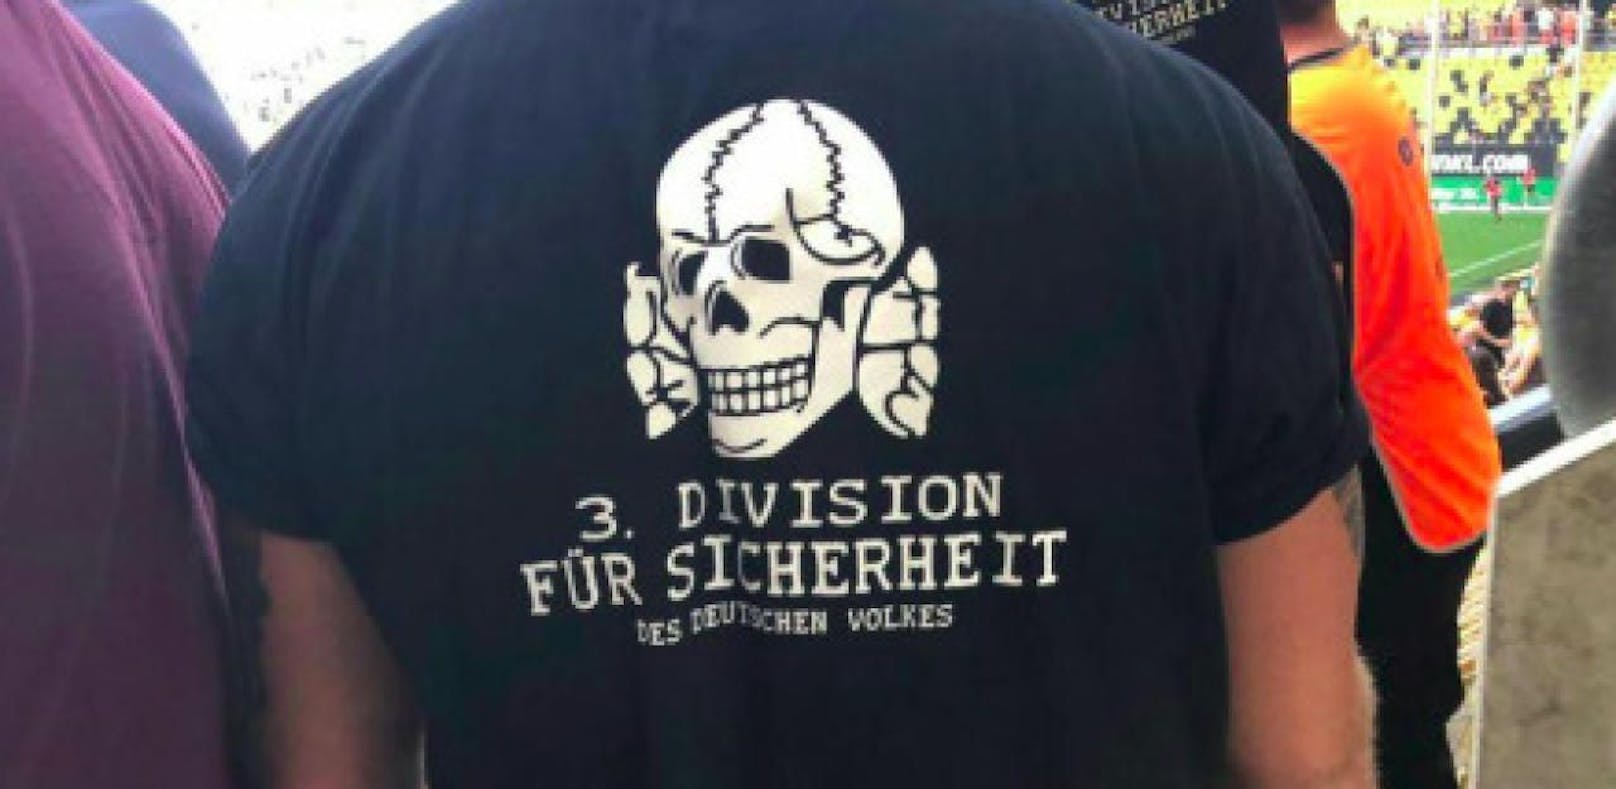 Neonazi-Skandal! Ordner mit SS-Shirt im Stadion